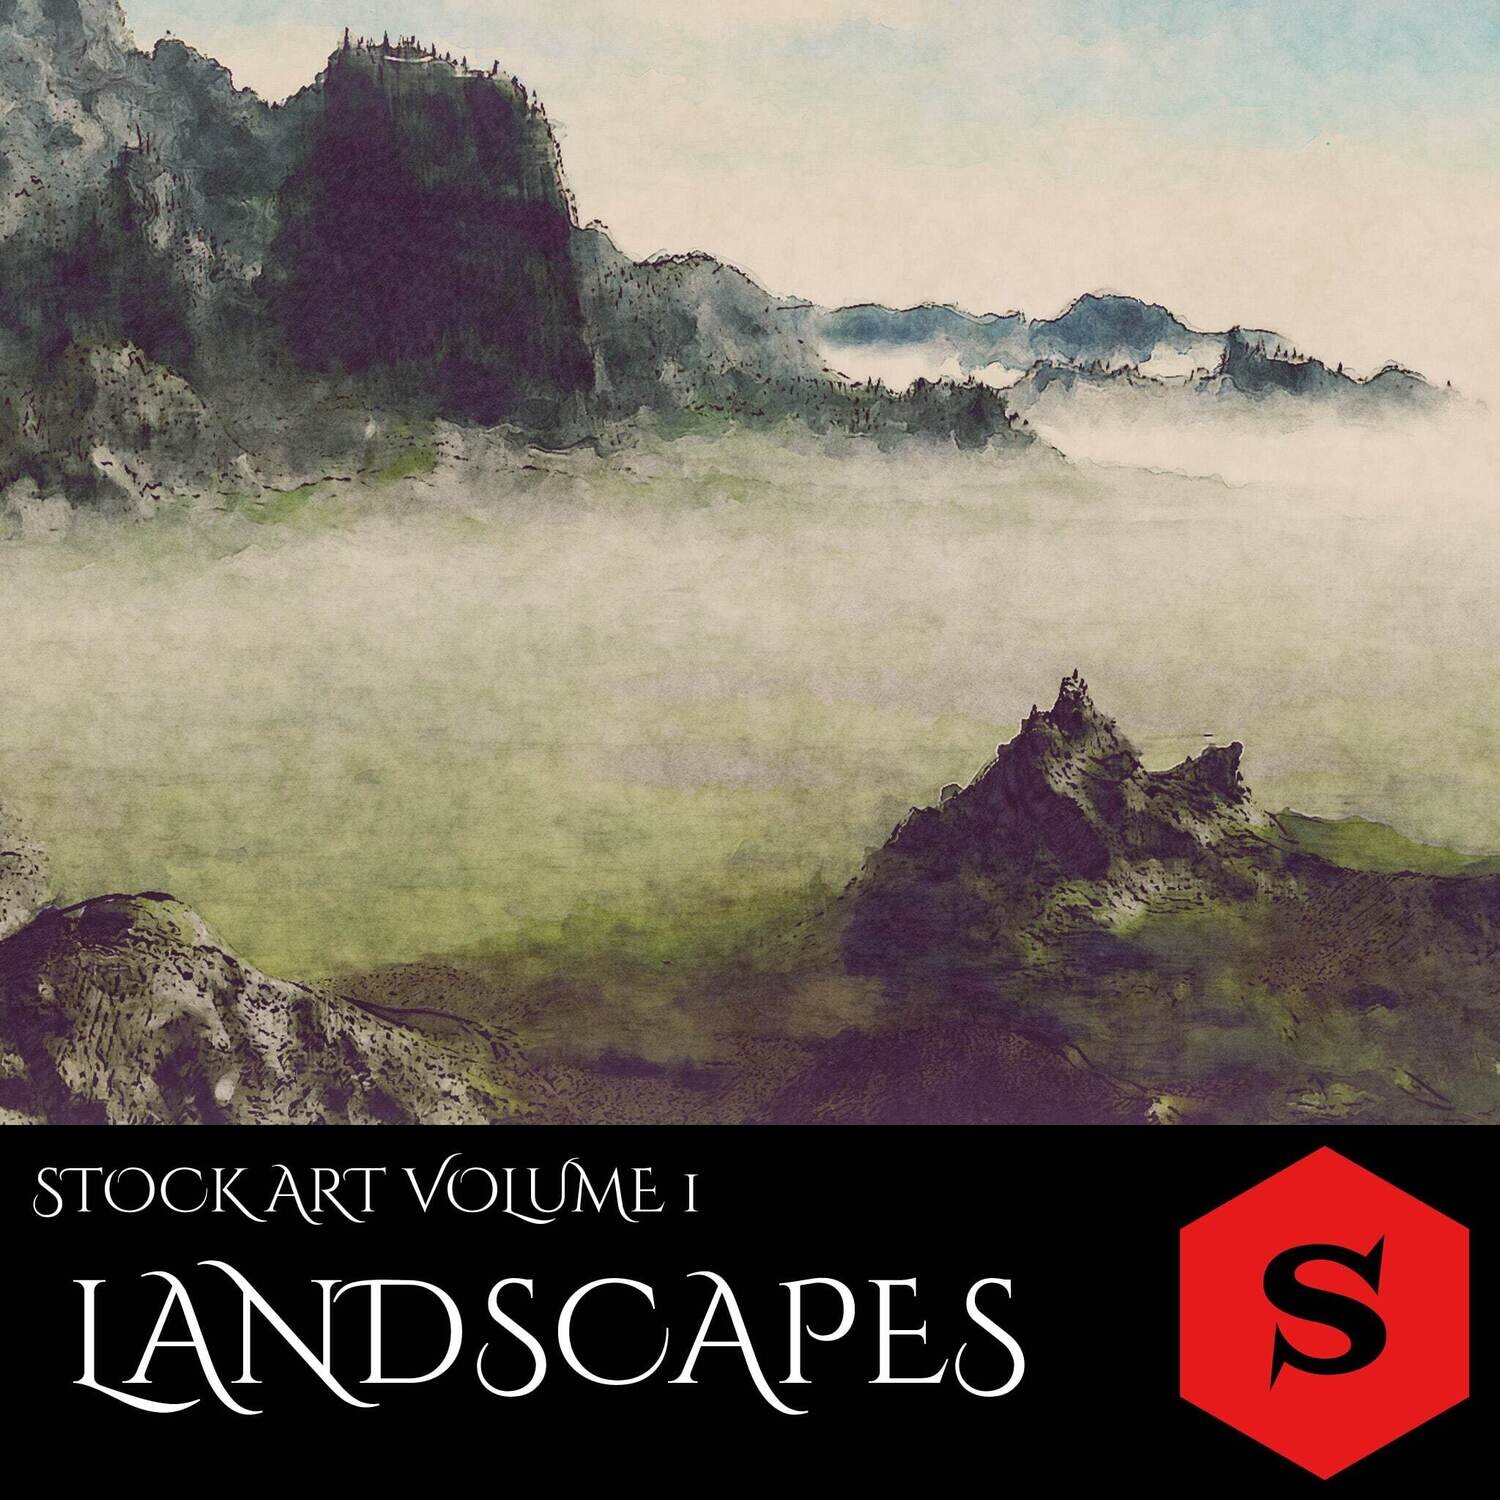 Stock Art Volume 1: Landscapes